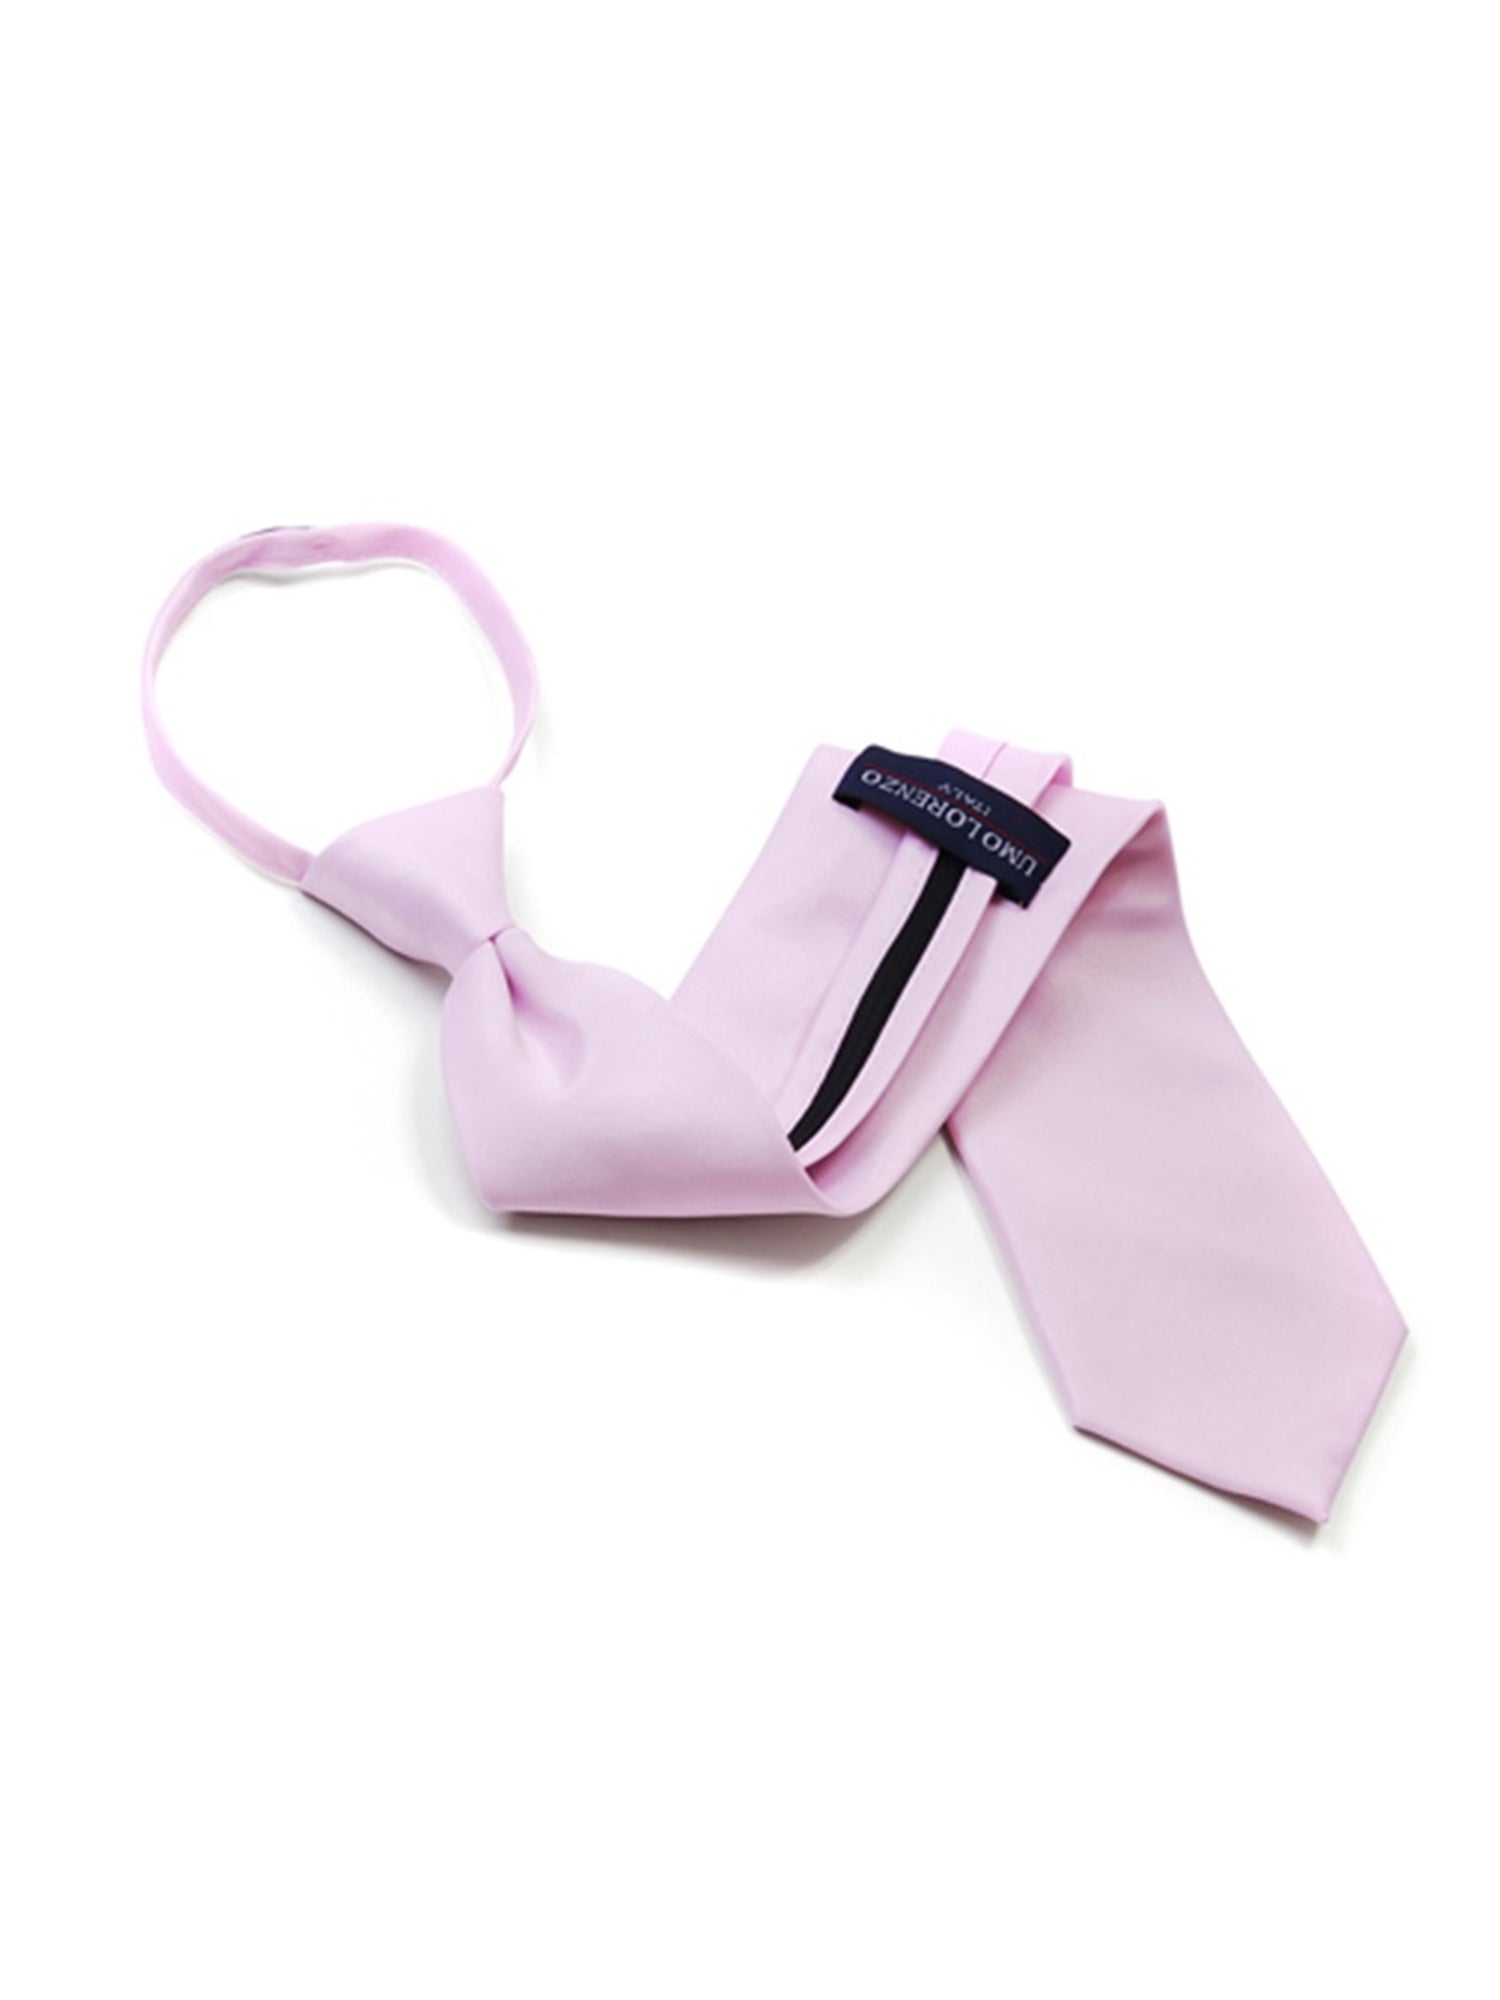 Men's Solid Color Pre-tied Zipper Neck Tie Dapper Neckwear TheDapperTie Pink One Size 